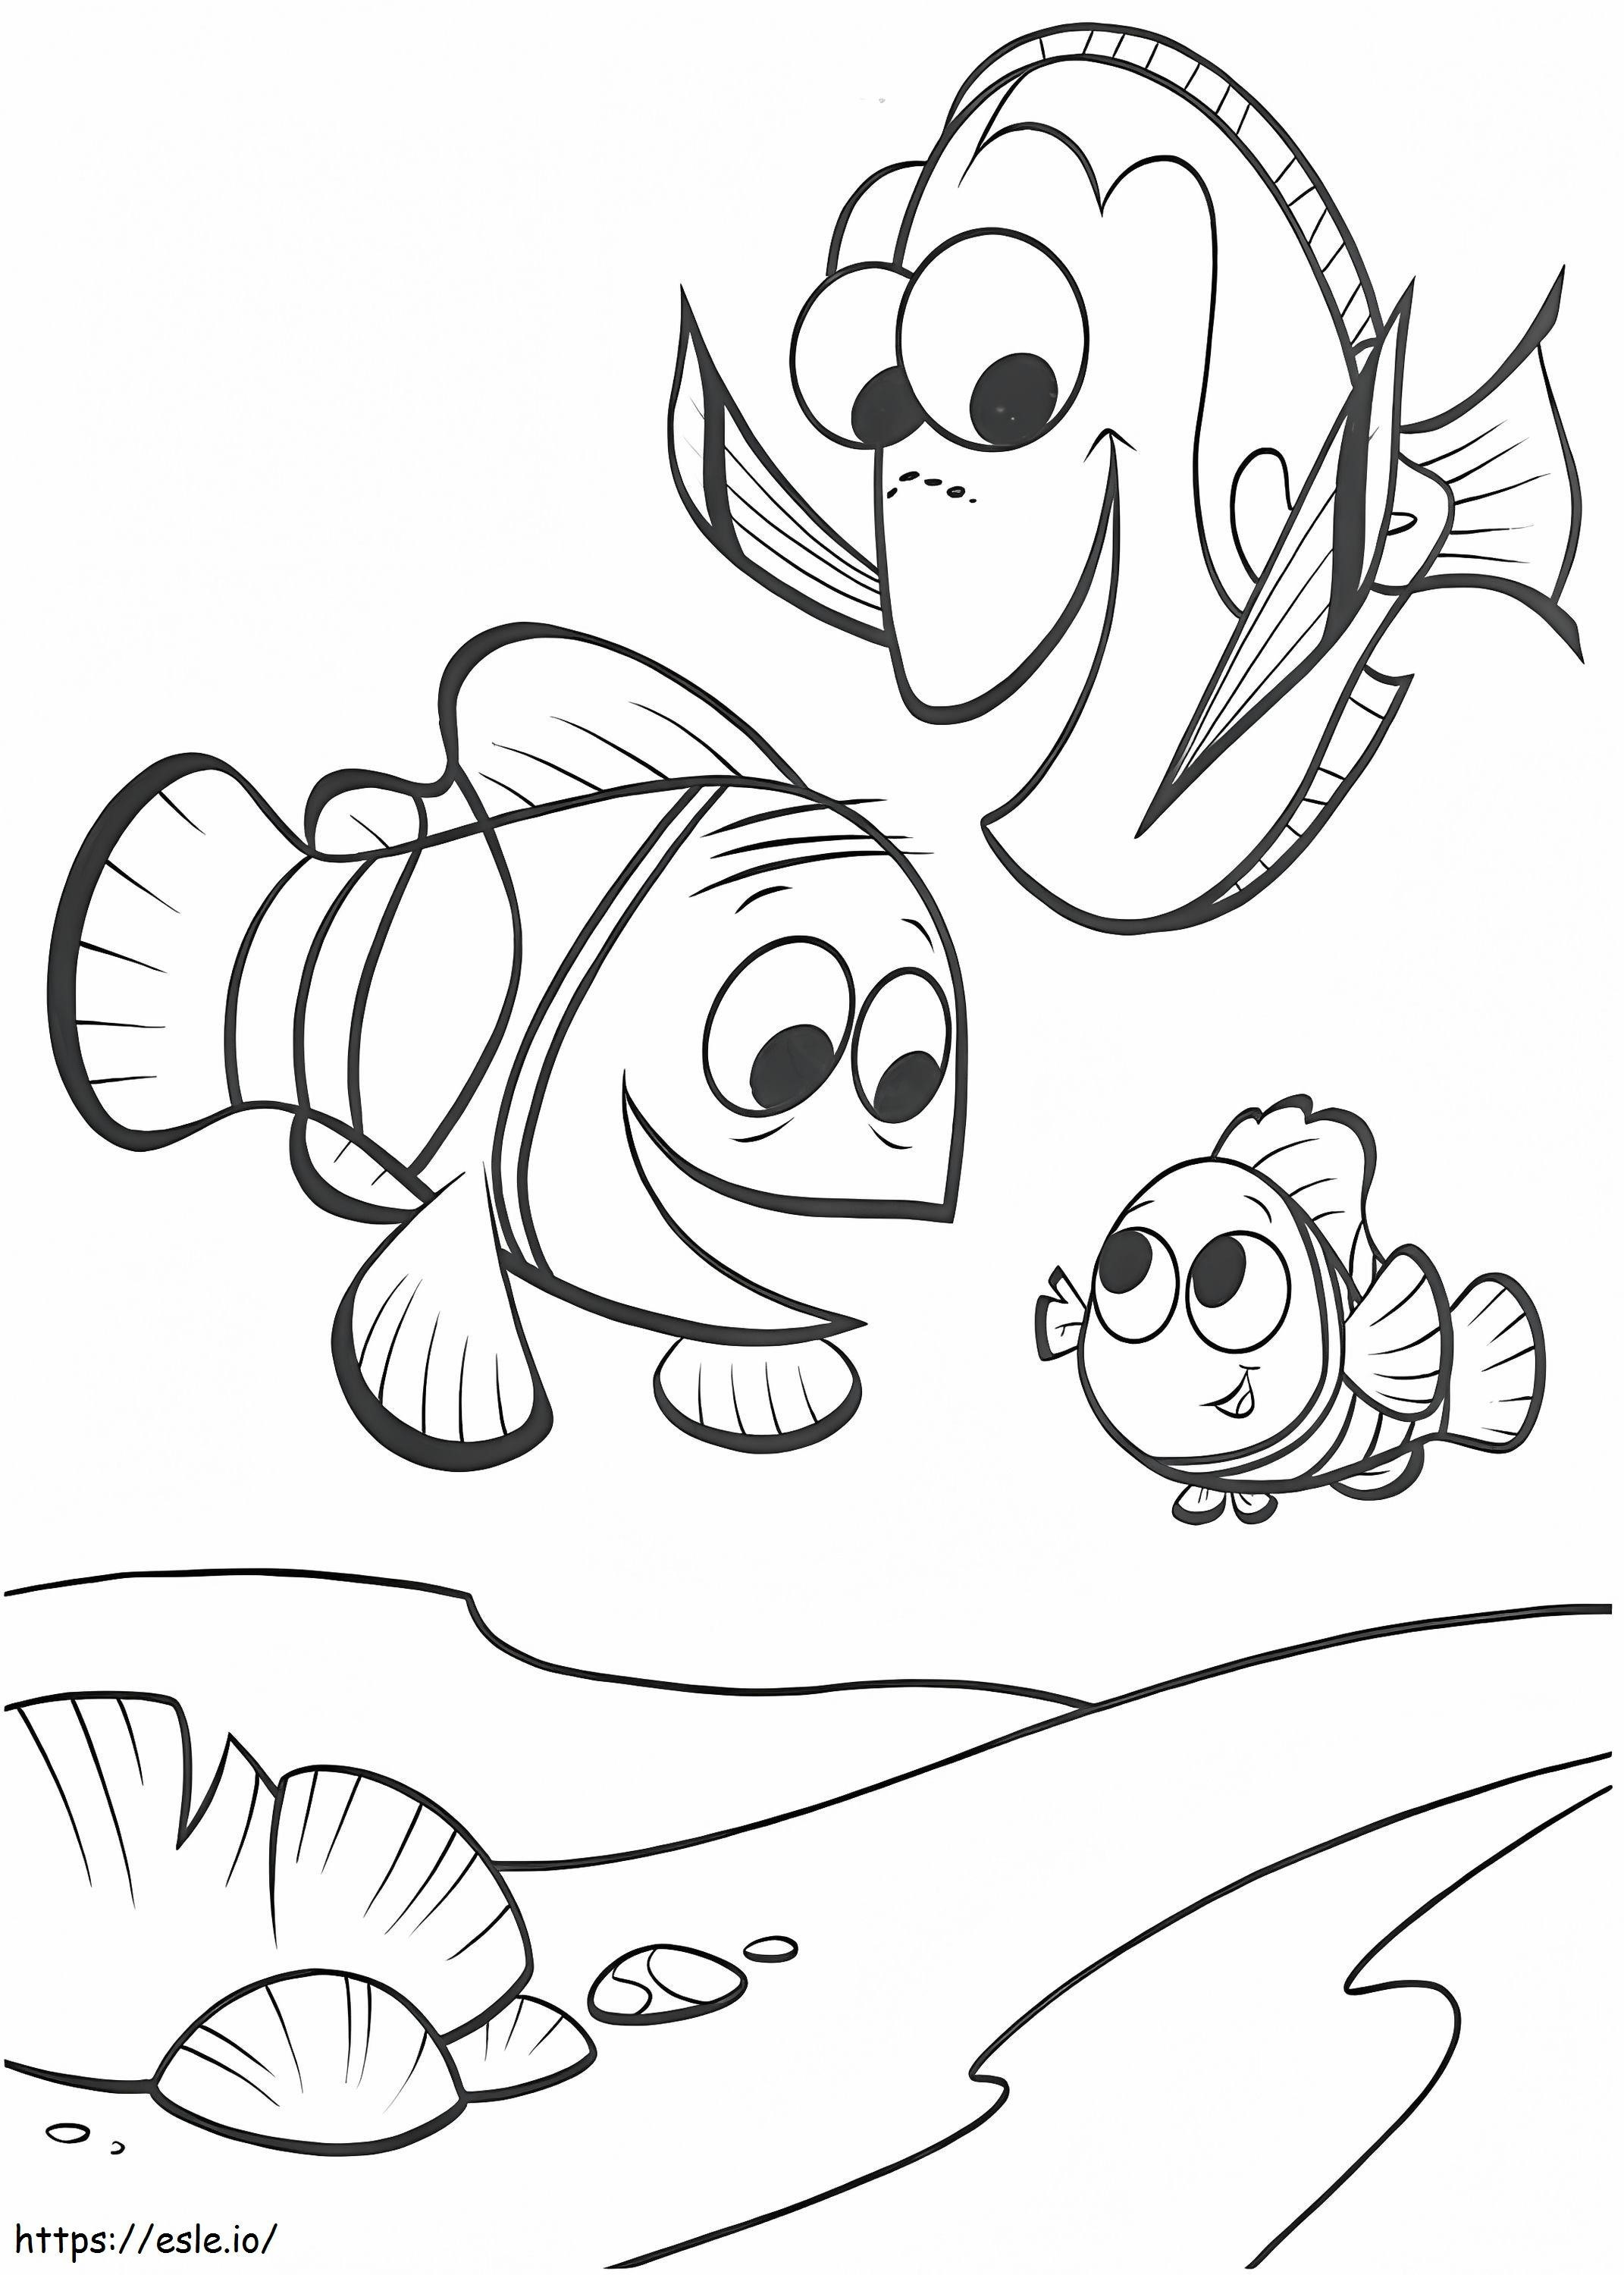 Coloriage _Nemo Marlin Doris A4 à imprimer dessin